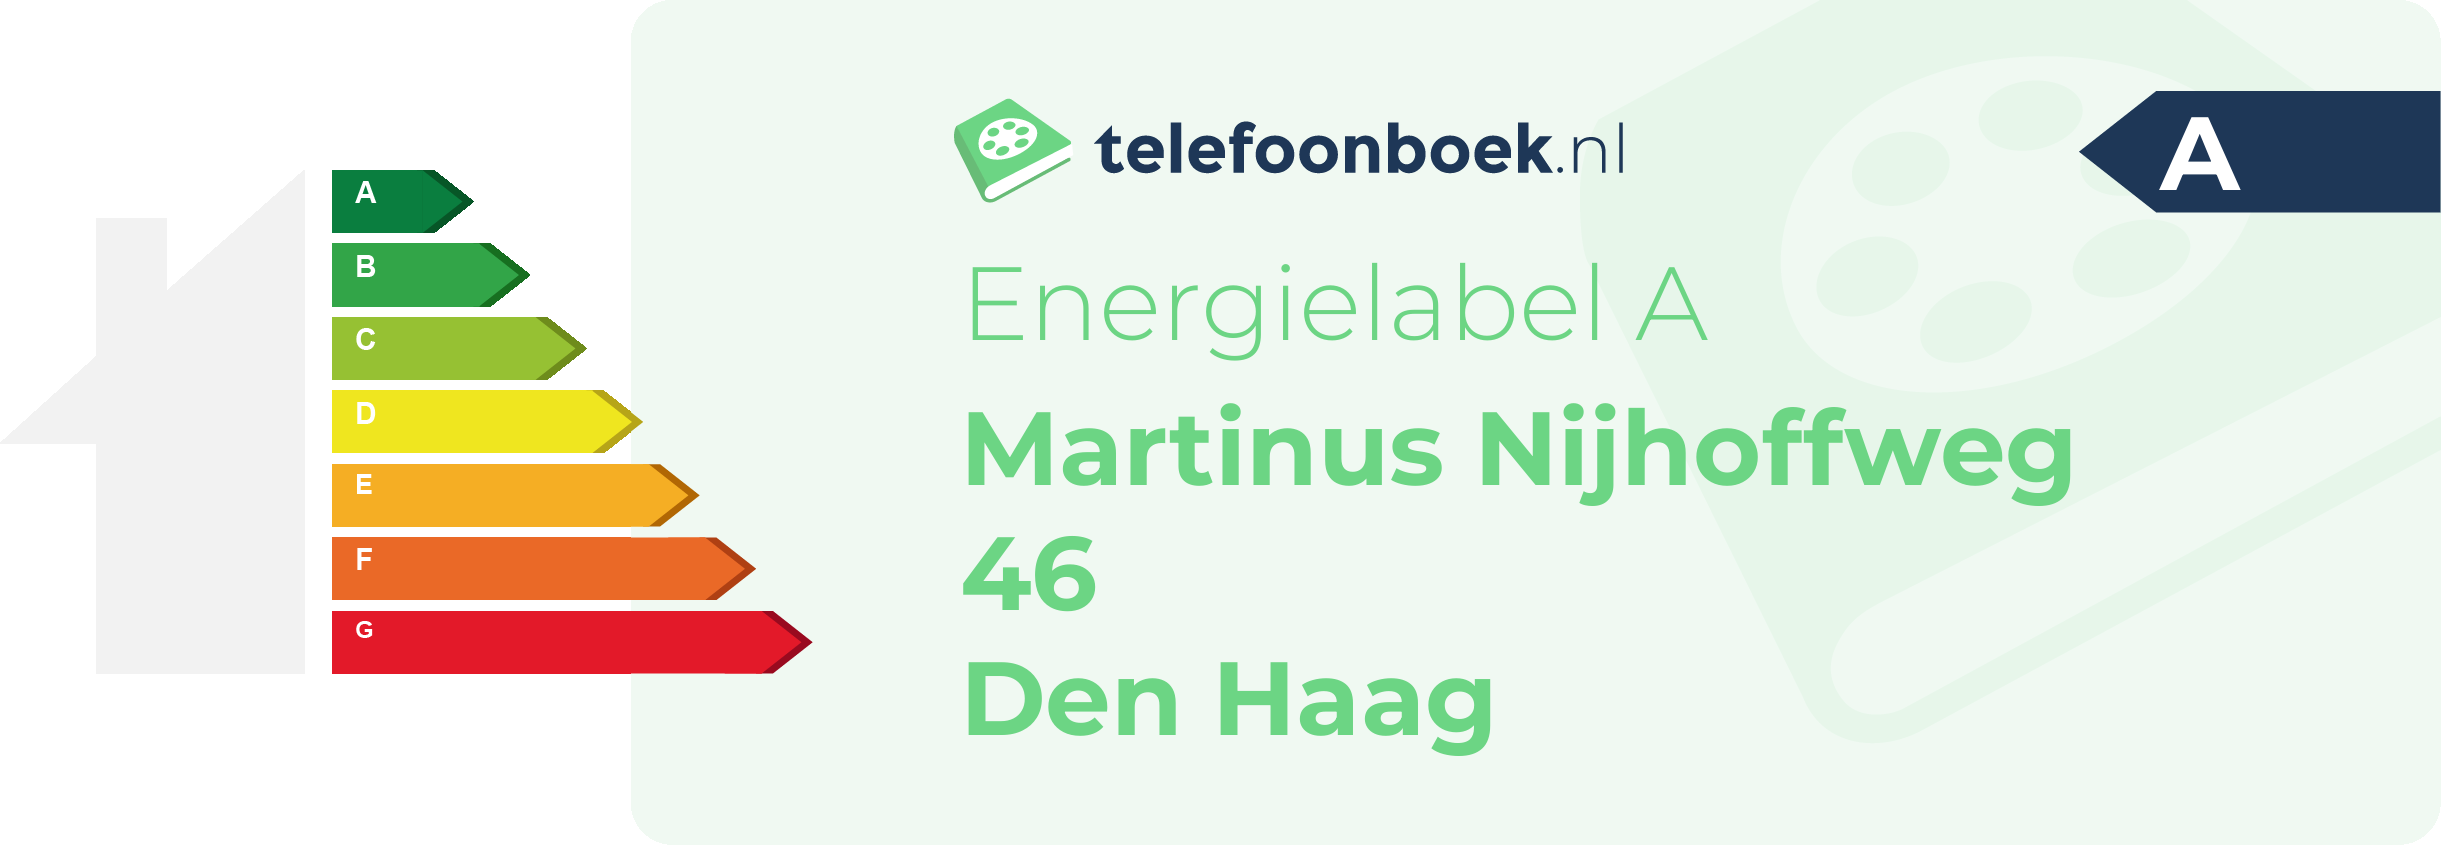 Energielabel Martinus Nijhoffweg 46 Den Haag